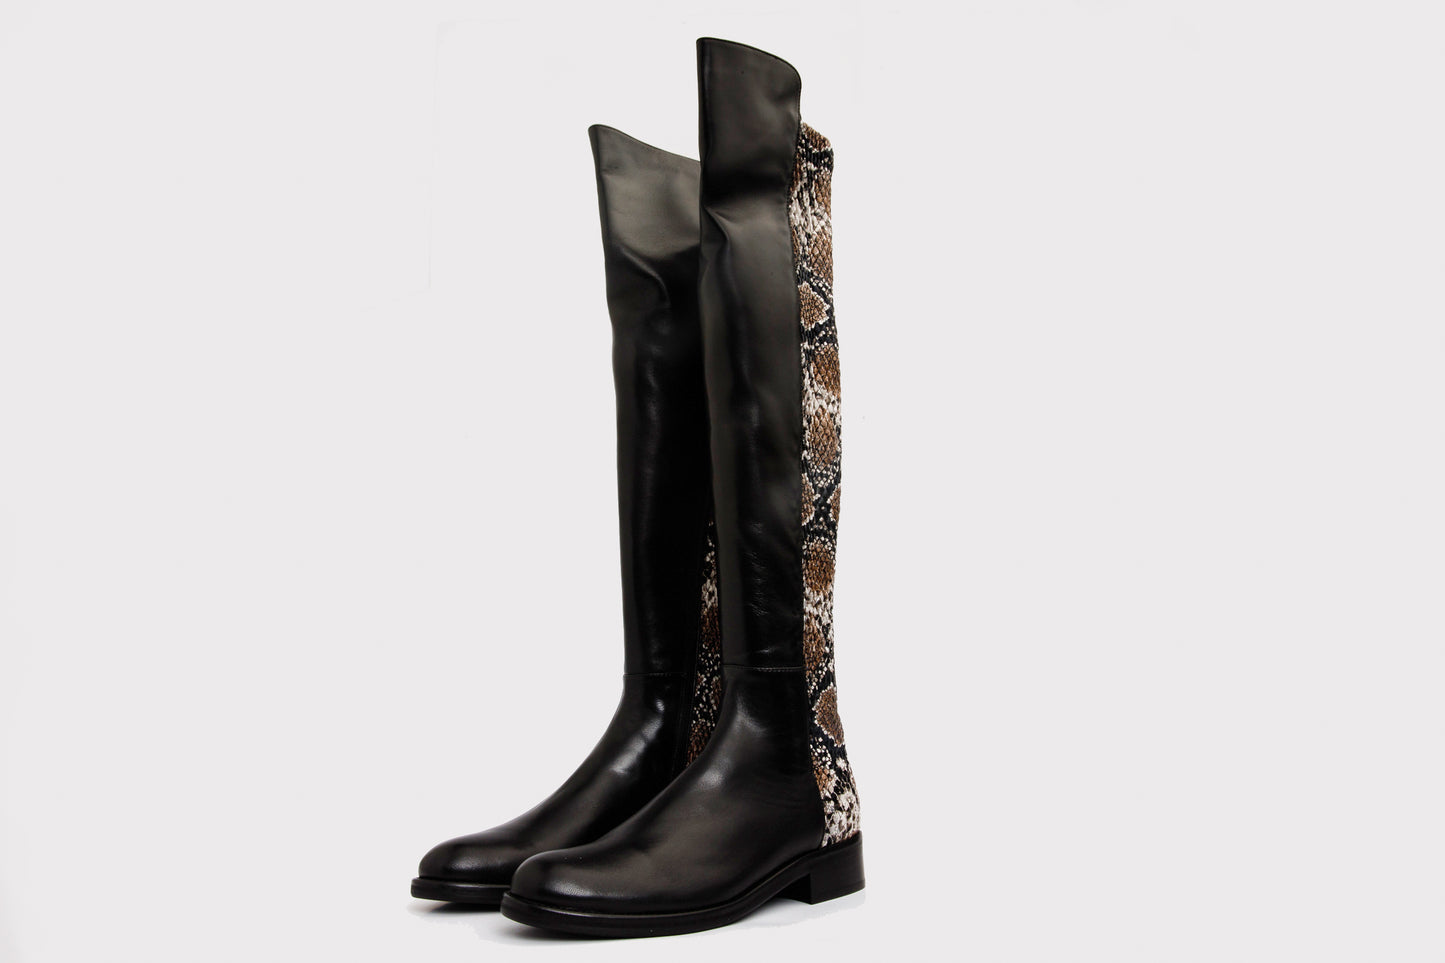 The Moengo Black Leather Leopard Knee High Women Boot